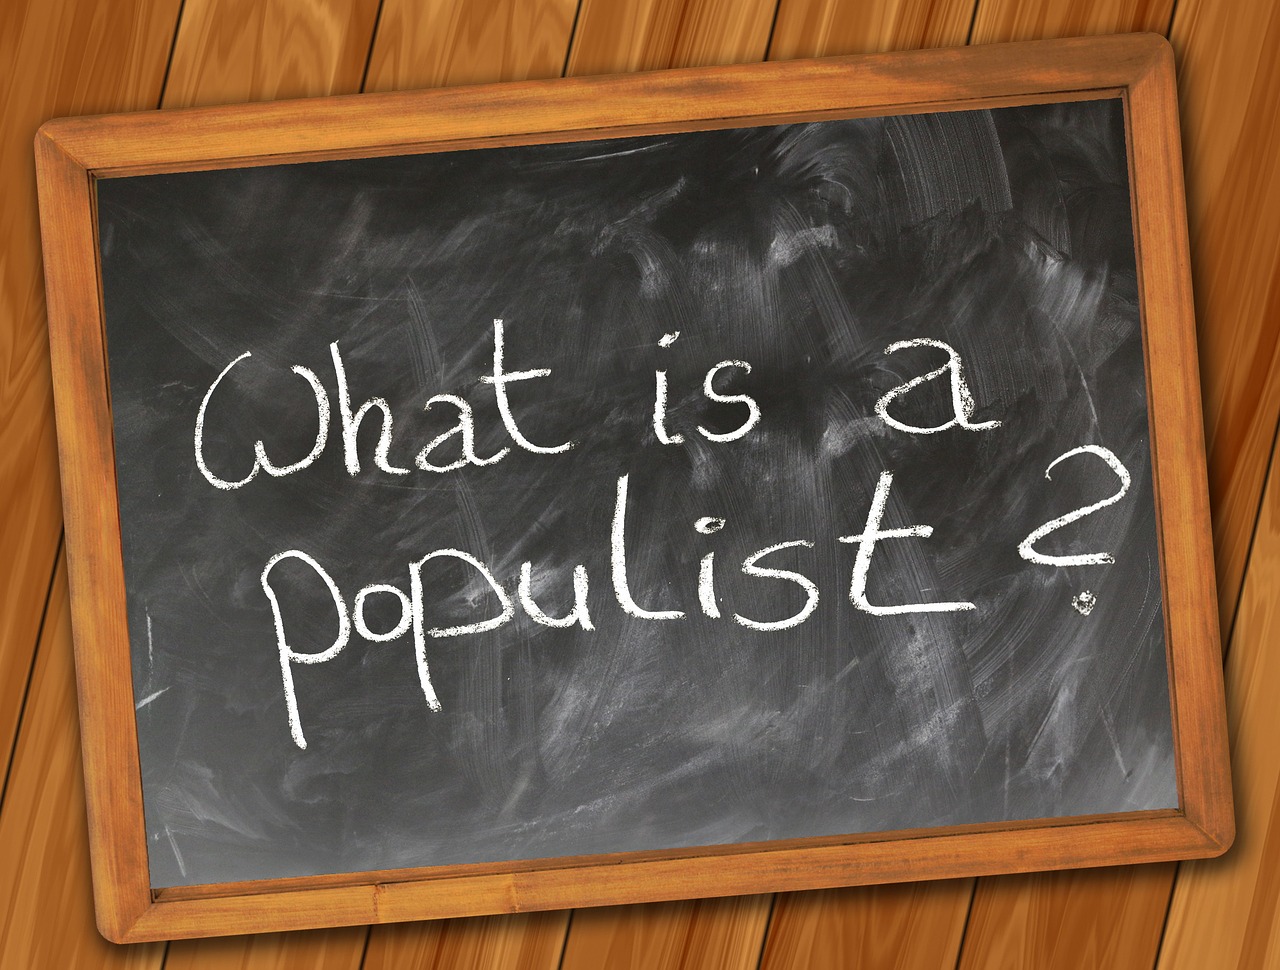 populist populism question free photo